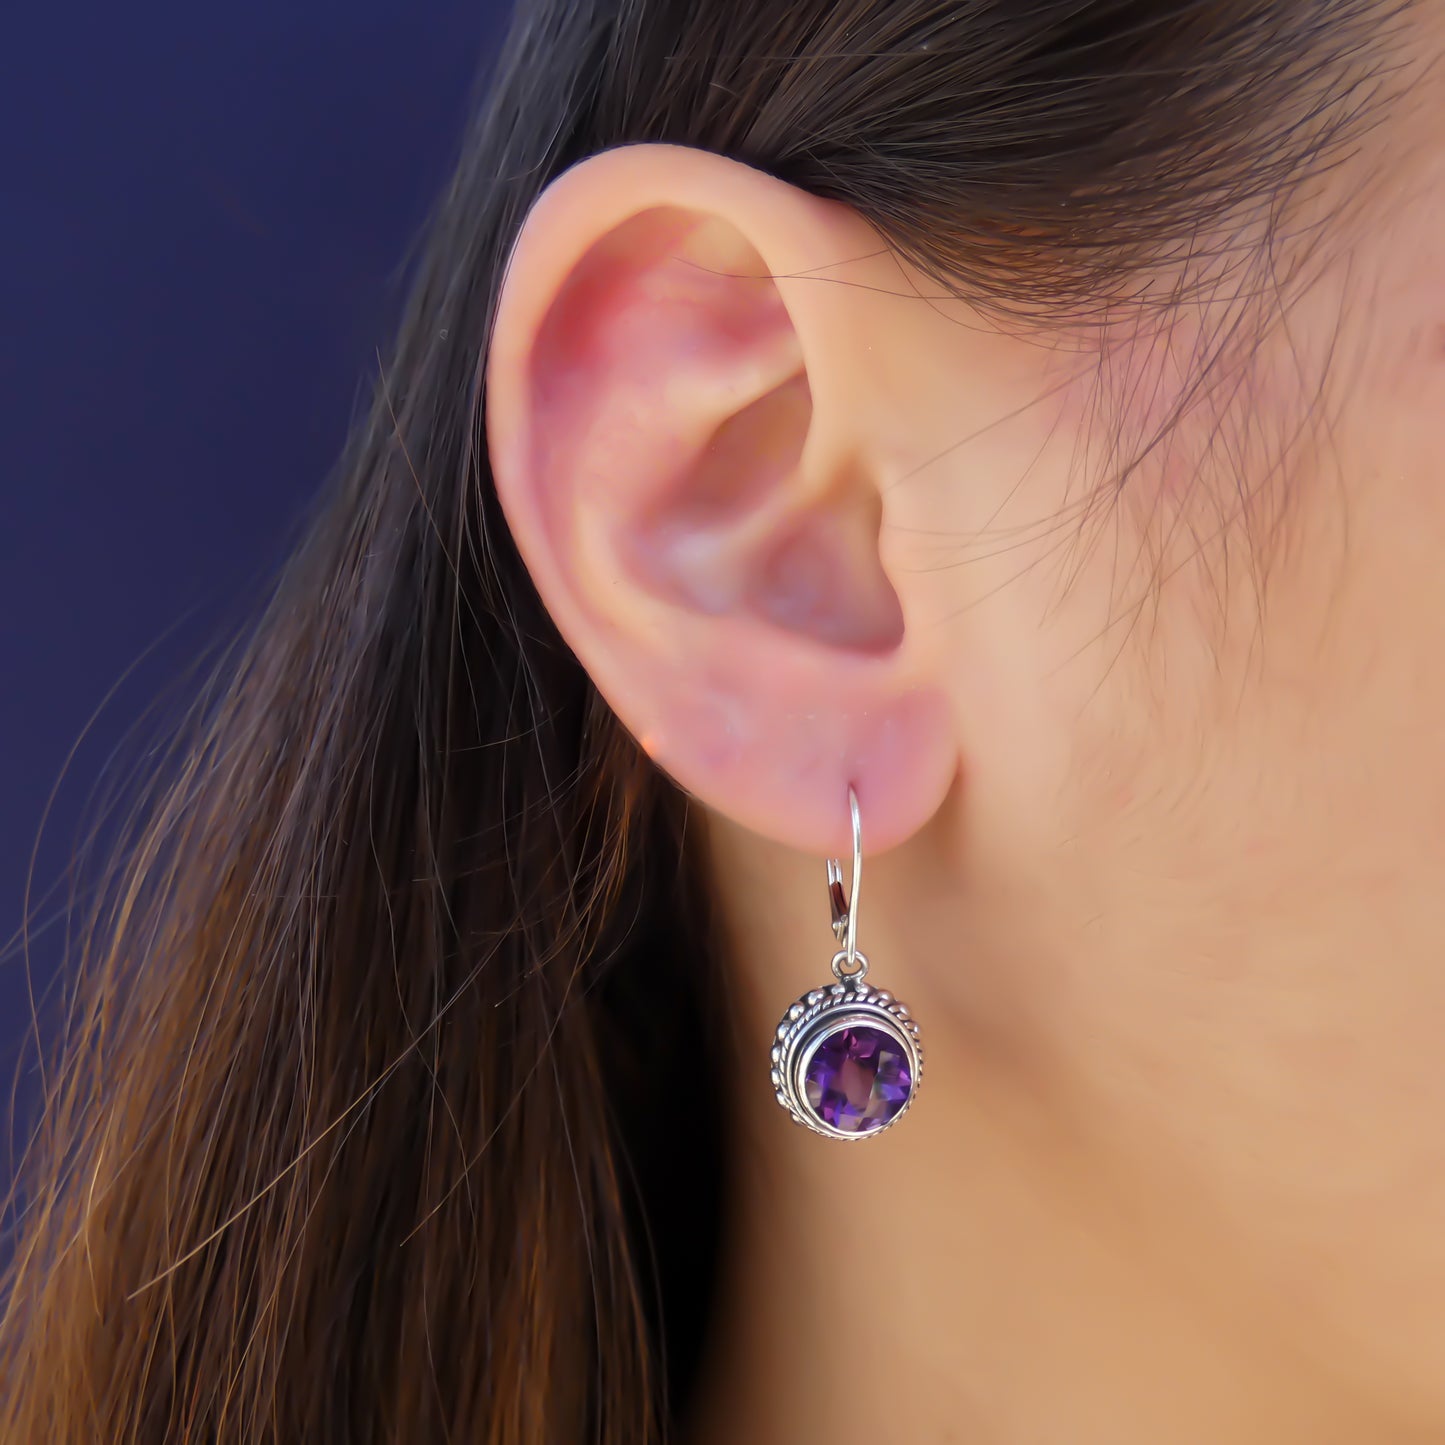 Woman wearing silver earrings with round purple amethyst gemstones.